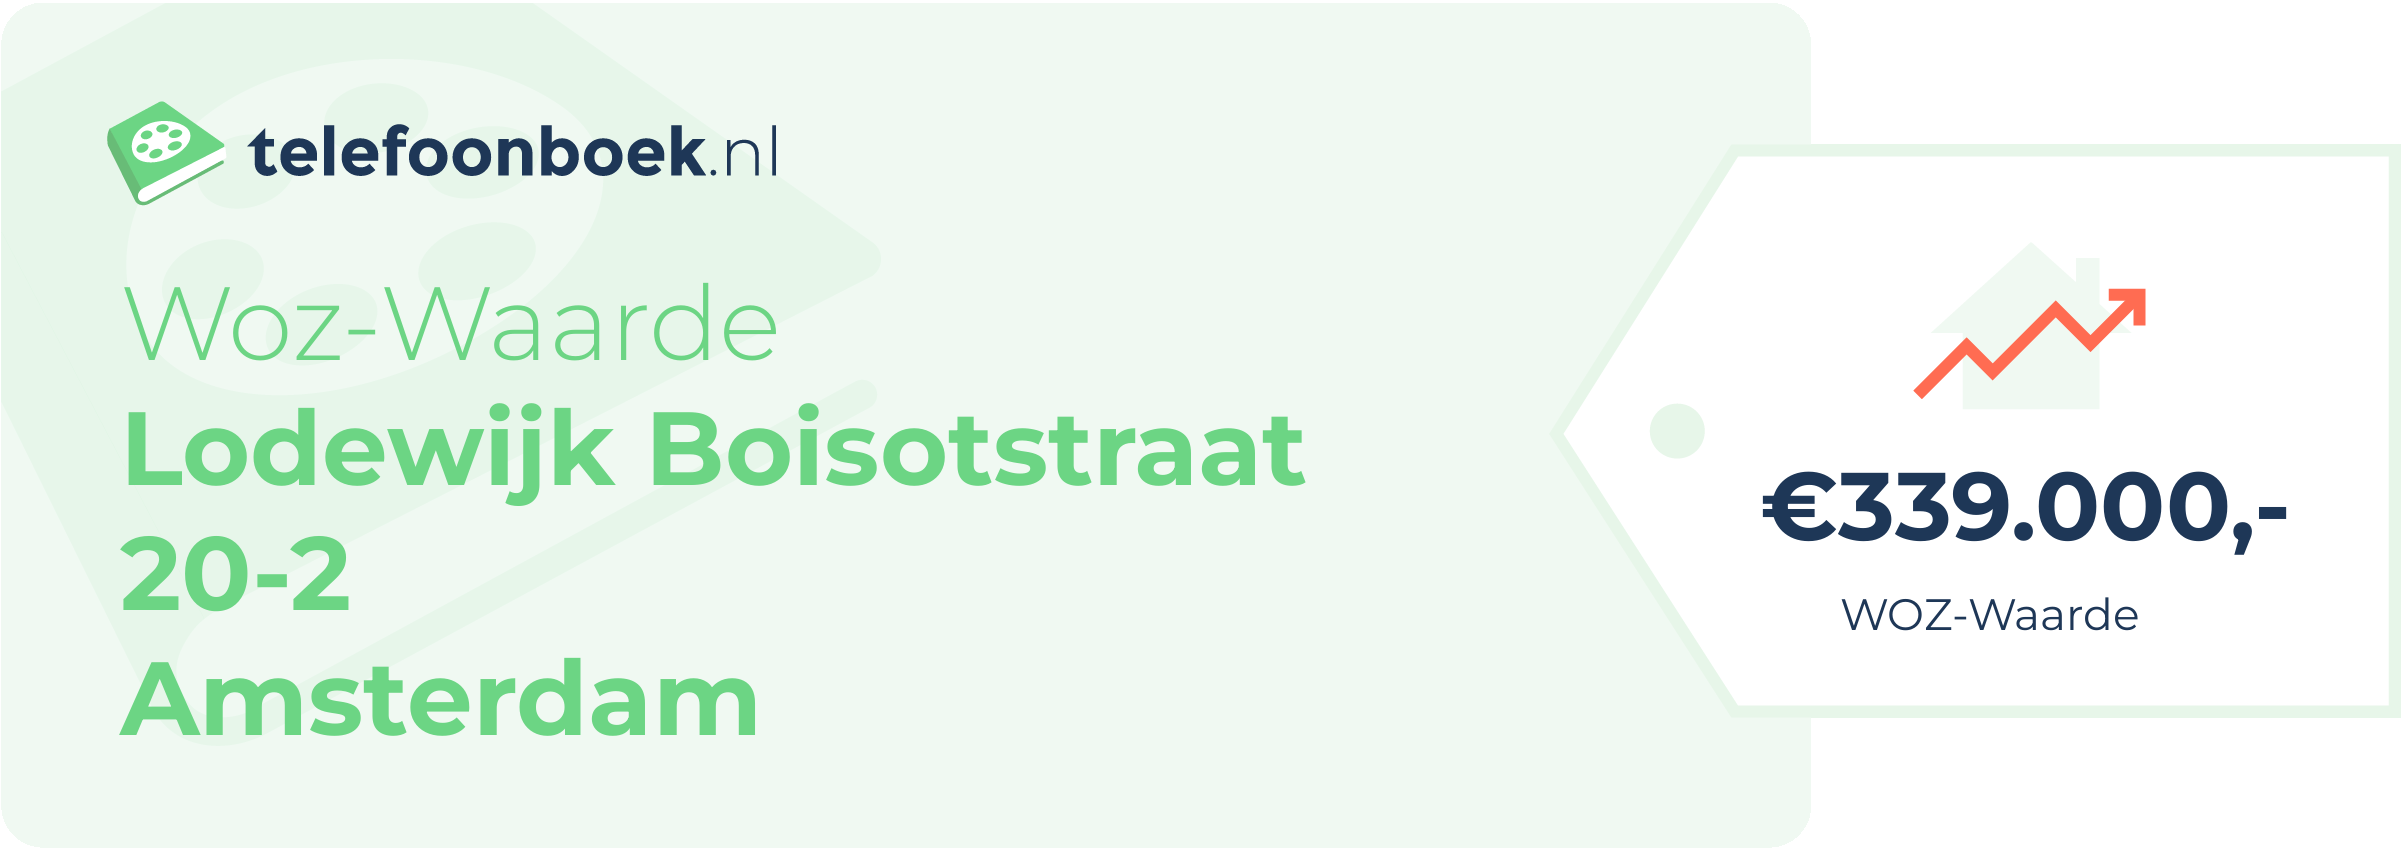 WOZ-waarde Lodewijk Boisotstraat 20-2 Amsterdam